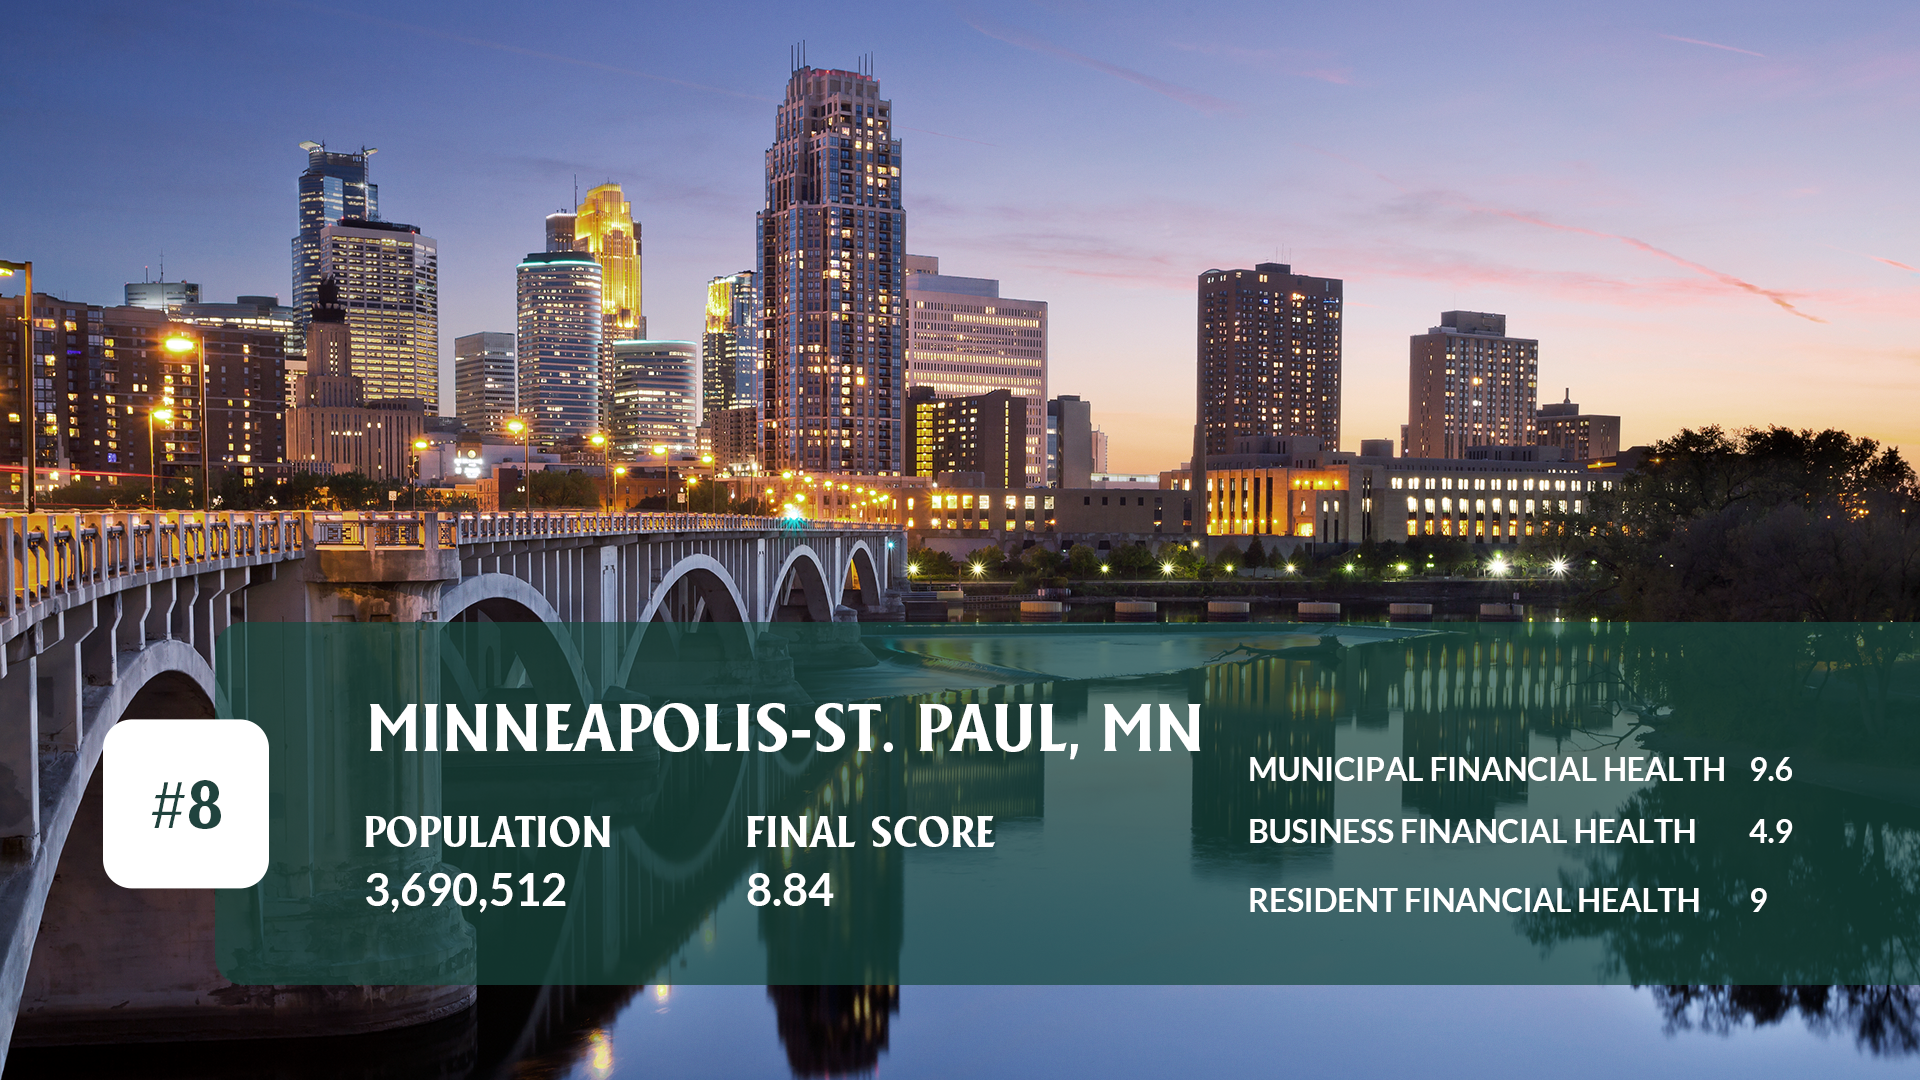 Minneapolis-St. Paul, MN Expanded Details